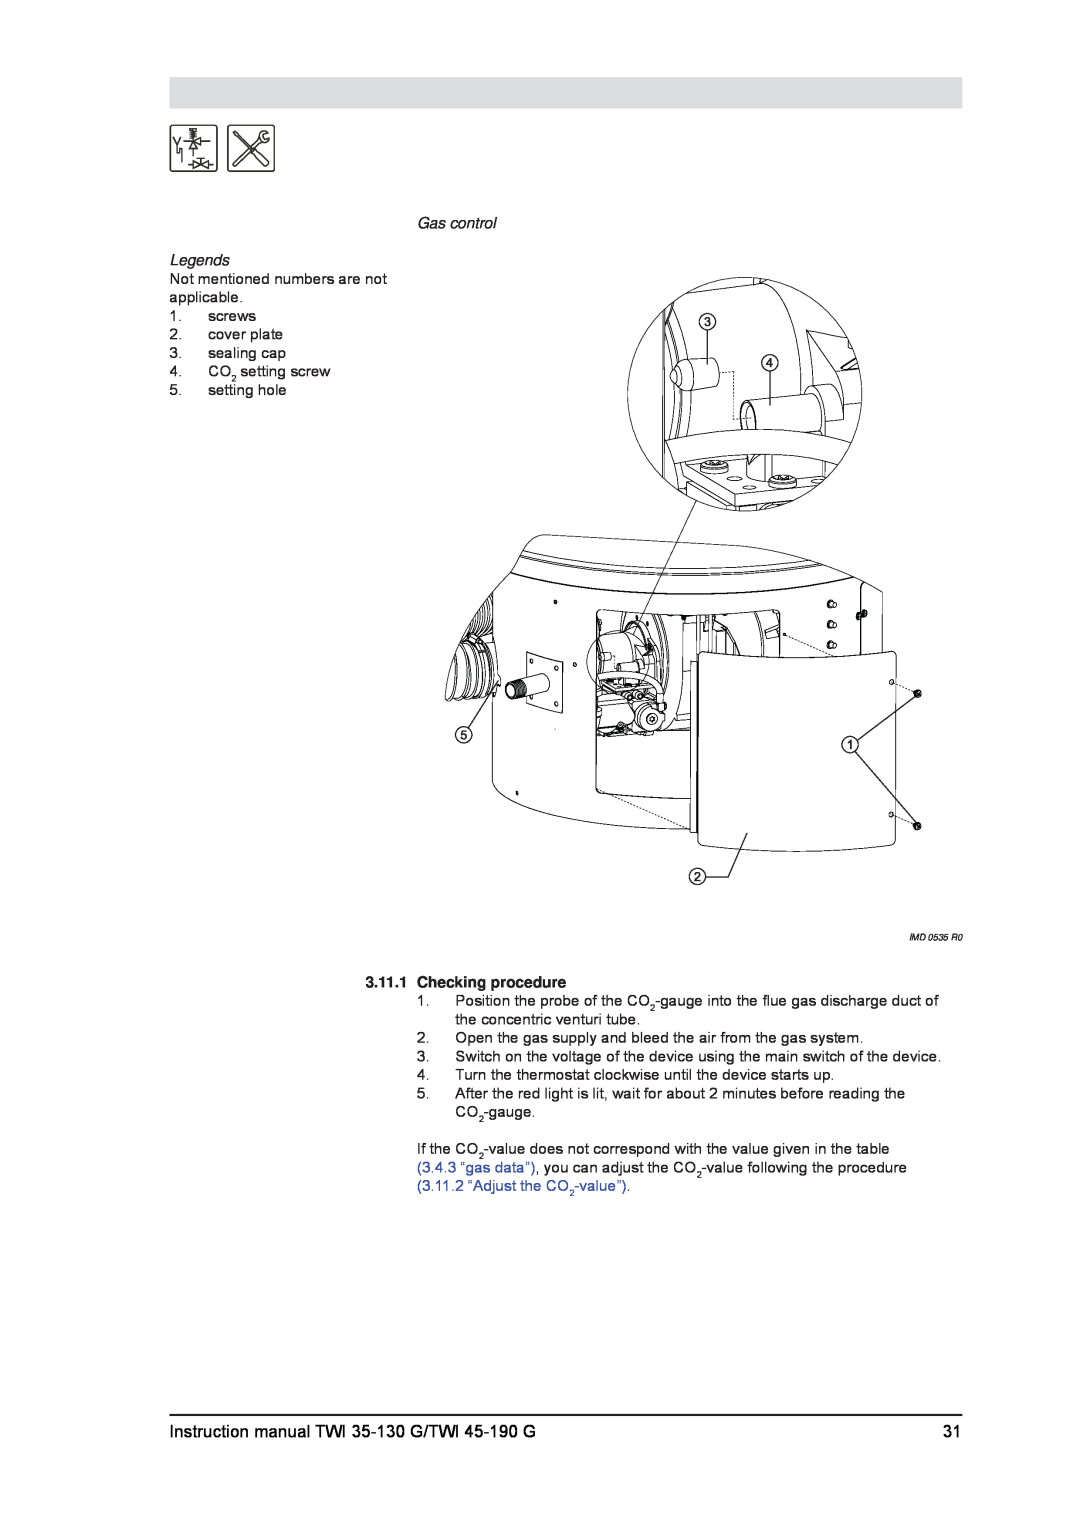 A.O. Smith service manual Checking procedure, Instruction manual TWI 35-130 G/TWI 45-190 G 